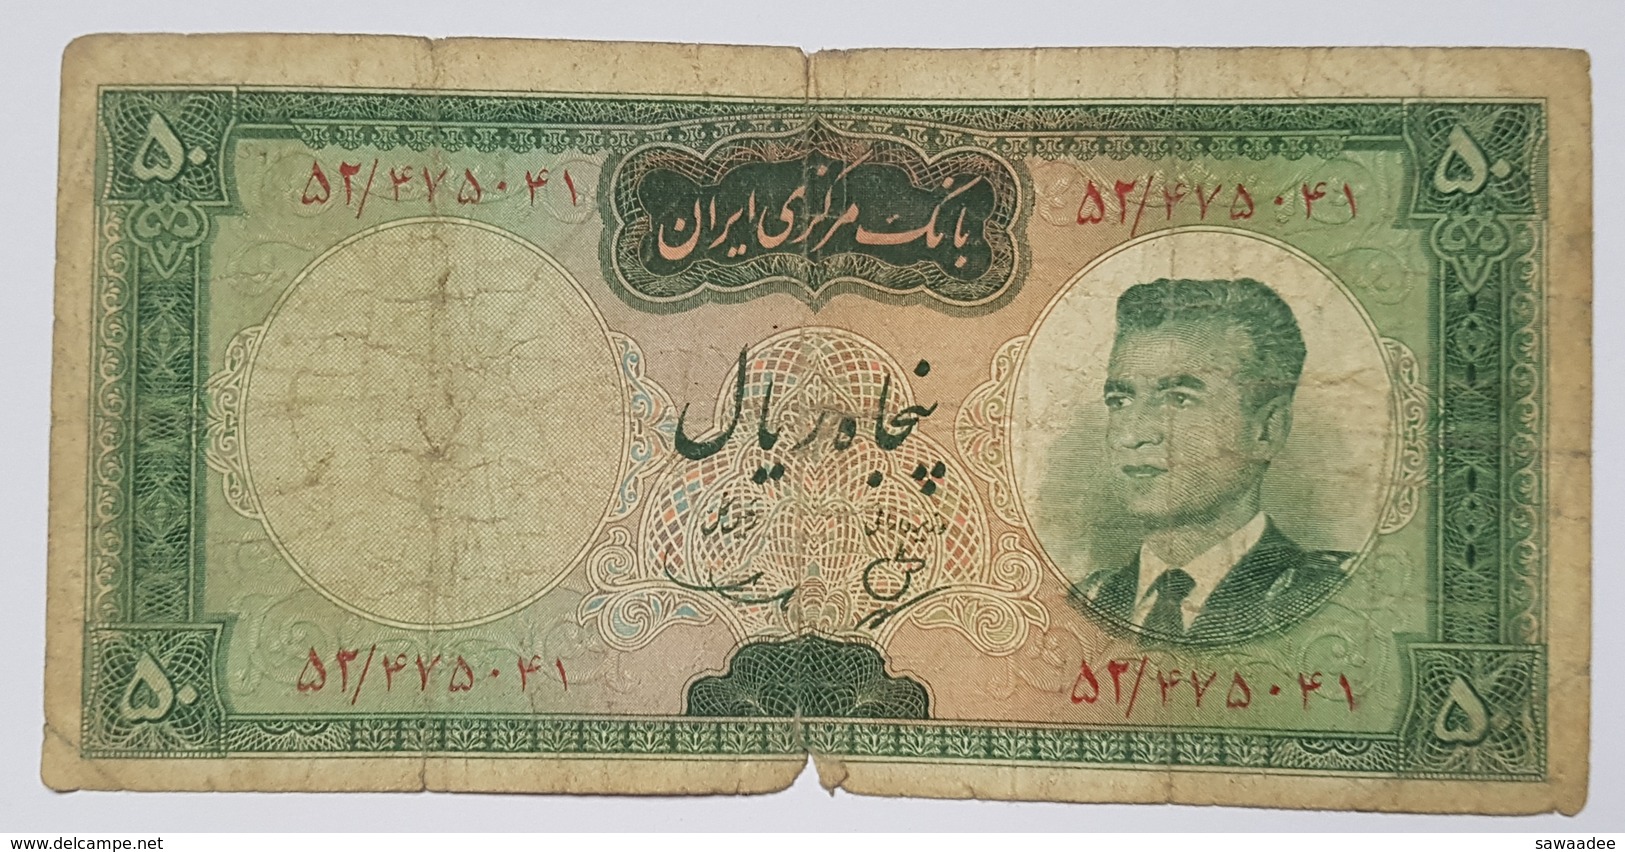 BILLET IRAN - ROYAUME - P.73 - 50 RIALS - 1962 - PORTRAIT DU SHAH PAHLAVI EN TENUE CIVILE - BARRAGE HYDROELECTRIQUE - Iran